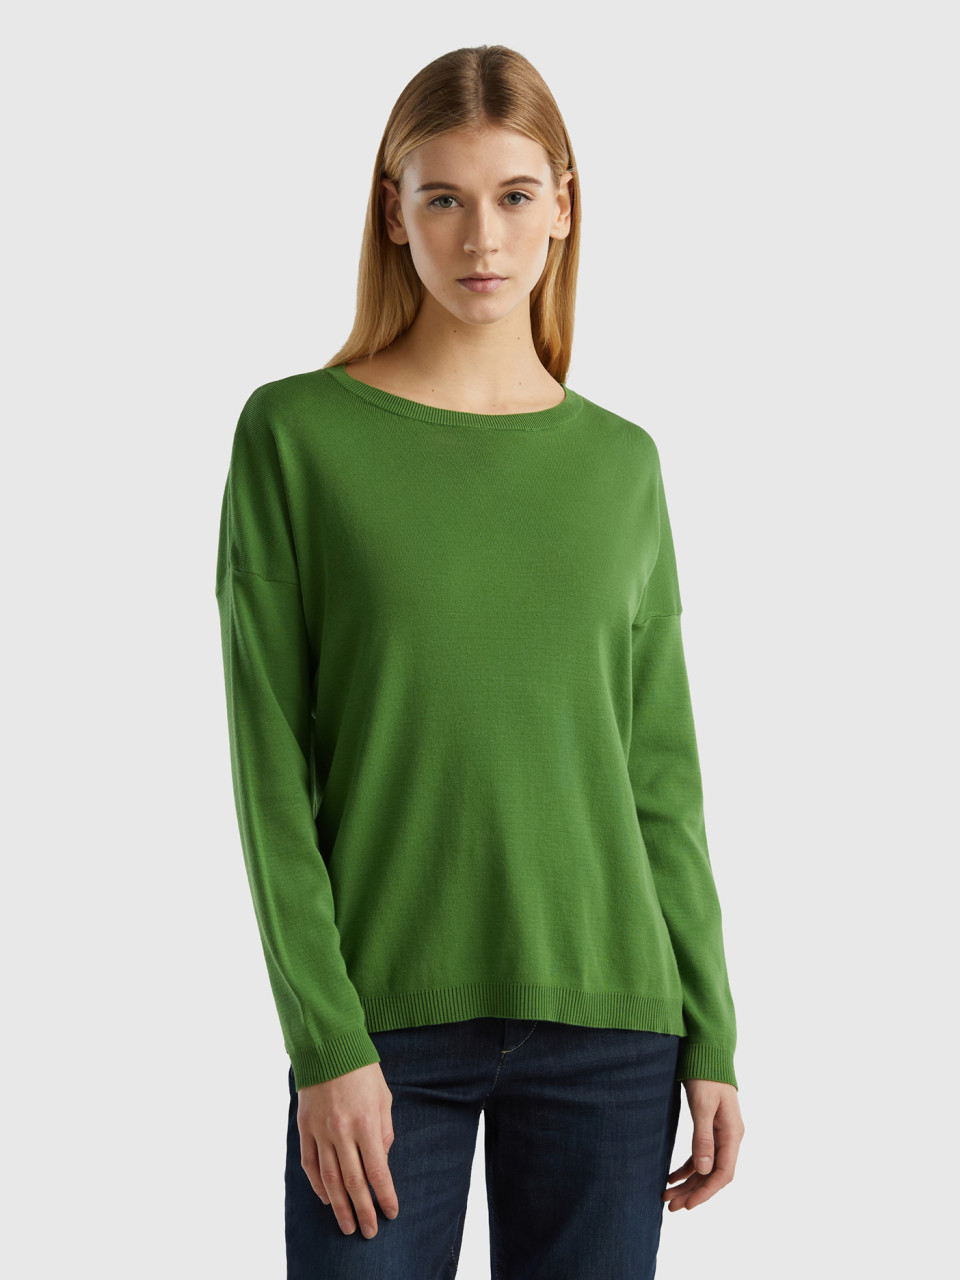 Benetton, Cotton Sweater With Round Neck, Military Green, Women